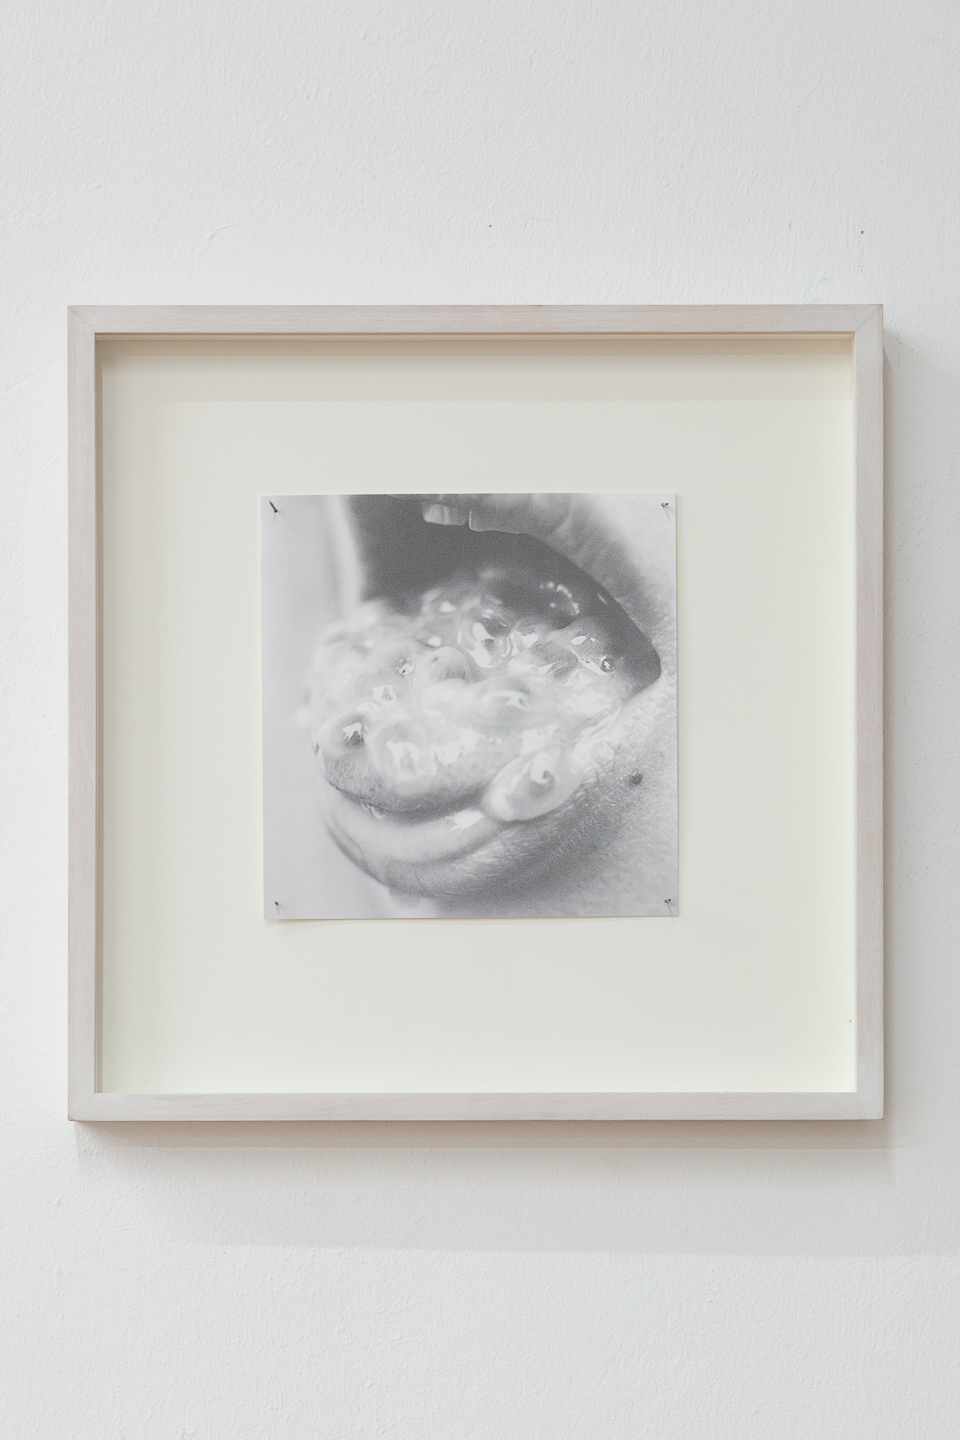 Olivia CoelnI Feel You (II), 2019Pigment print in wooden frame27 x 27 cm framedUnique